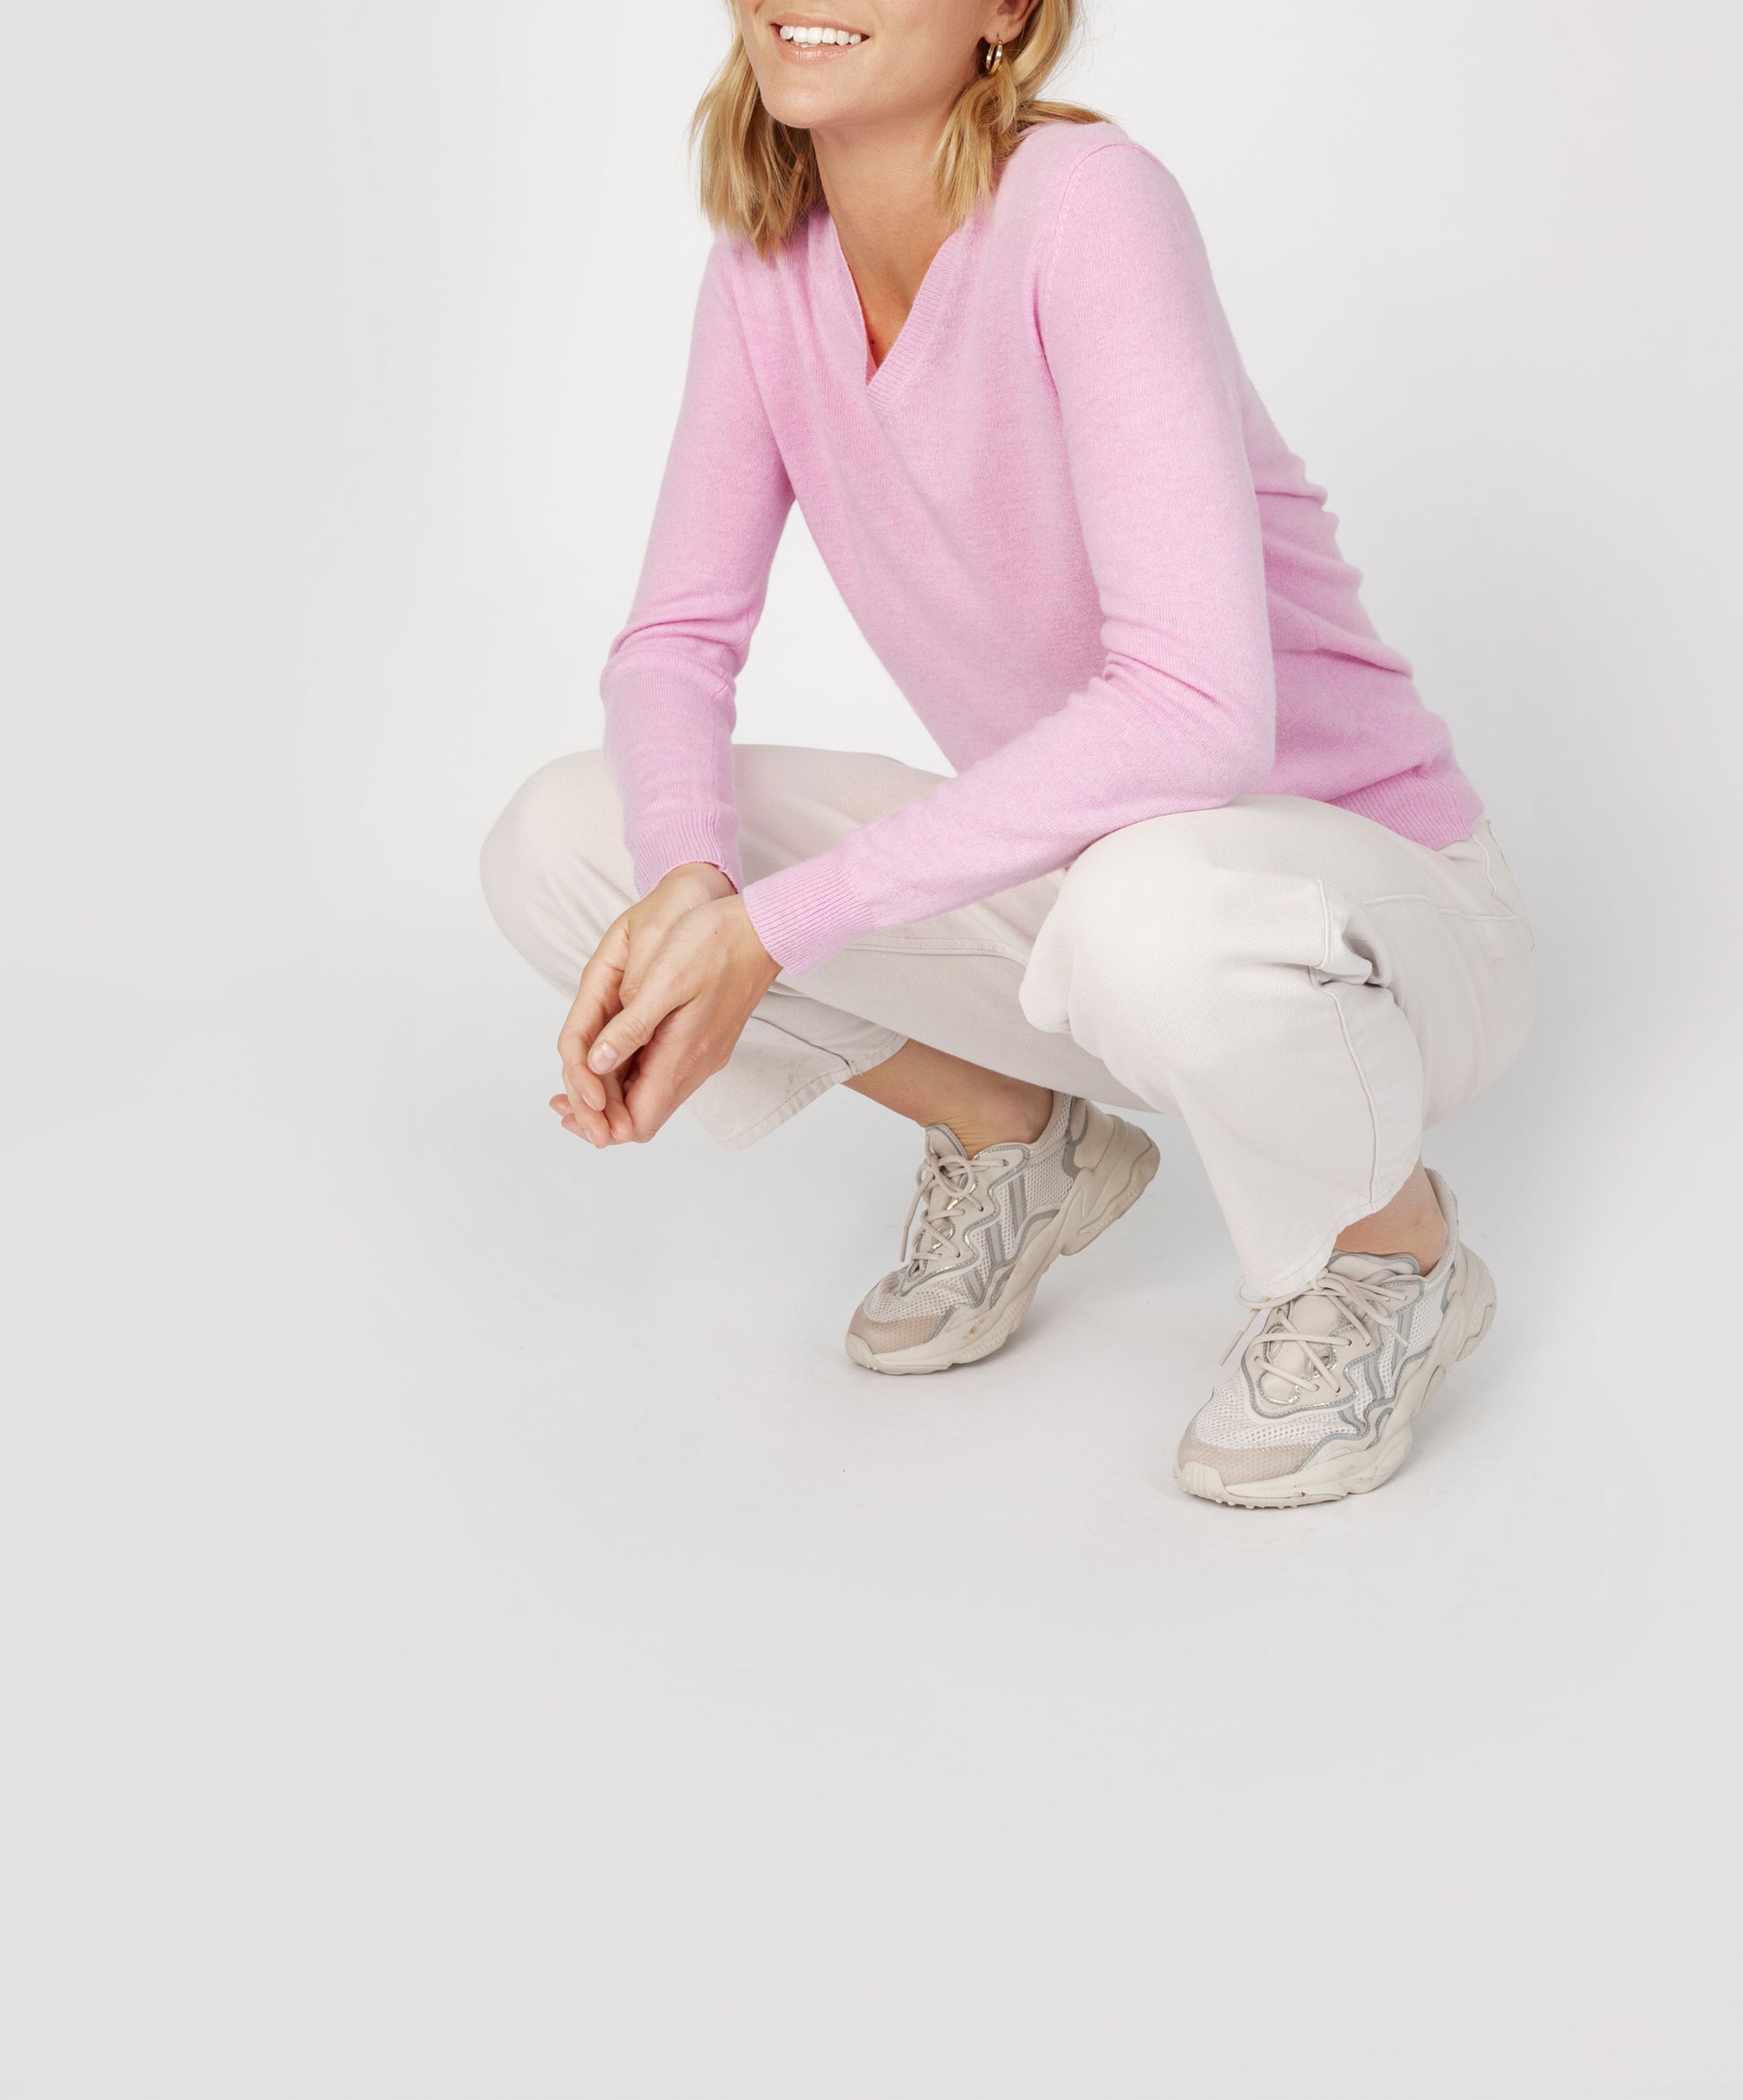 IrelandsEye Knitwear Luxe Touch Wool V Neck Sweater Pink Sunset